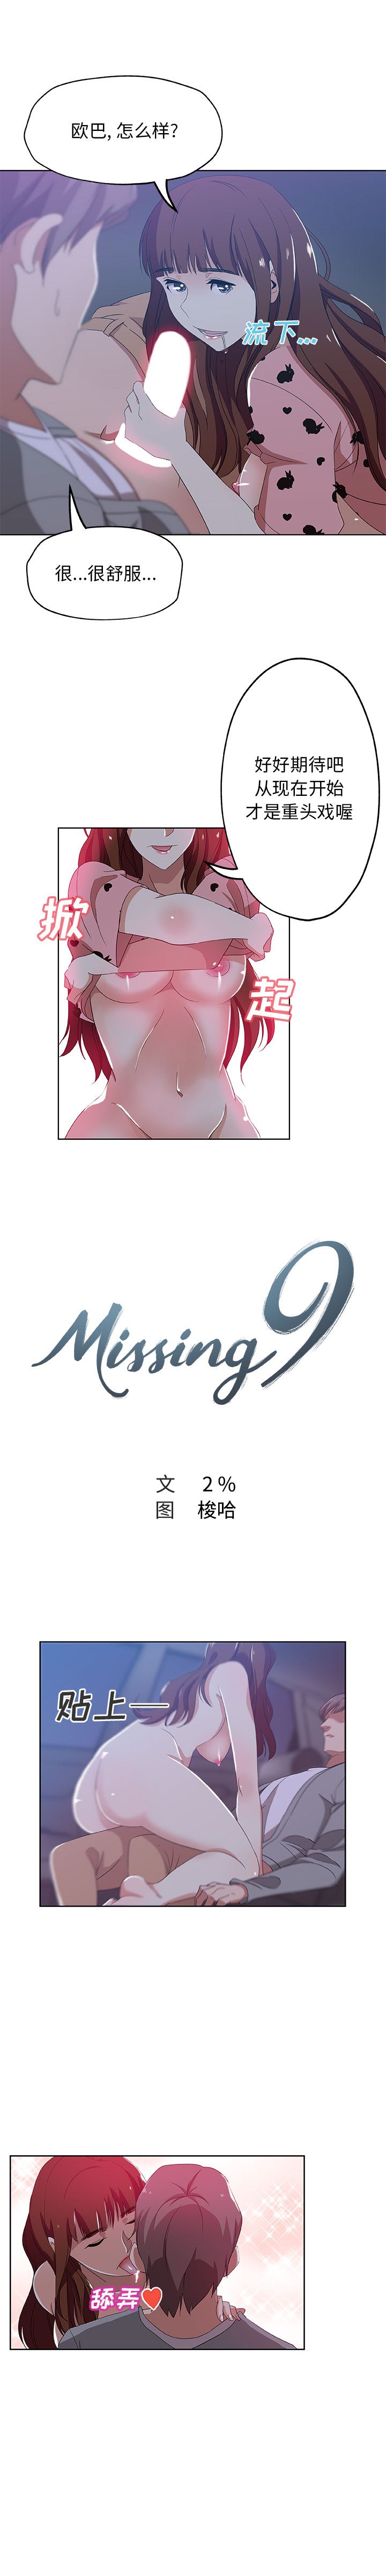 Missing9-Missing9：6全彩韩漫标签